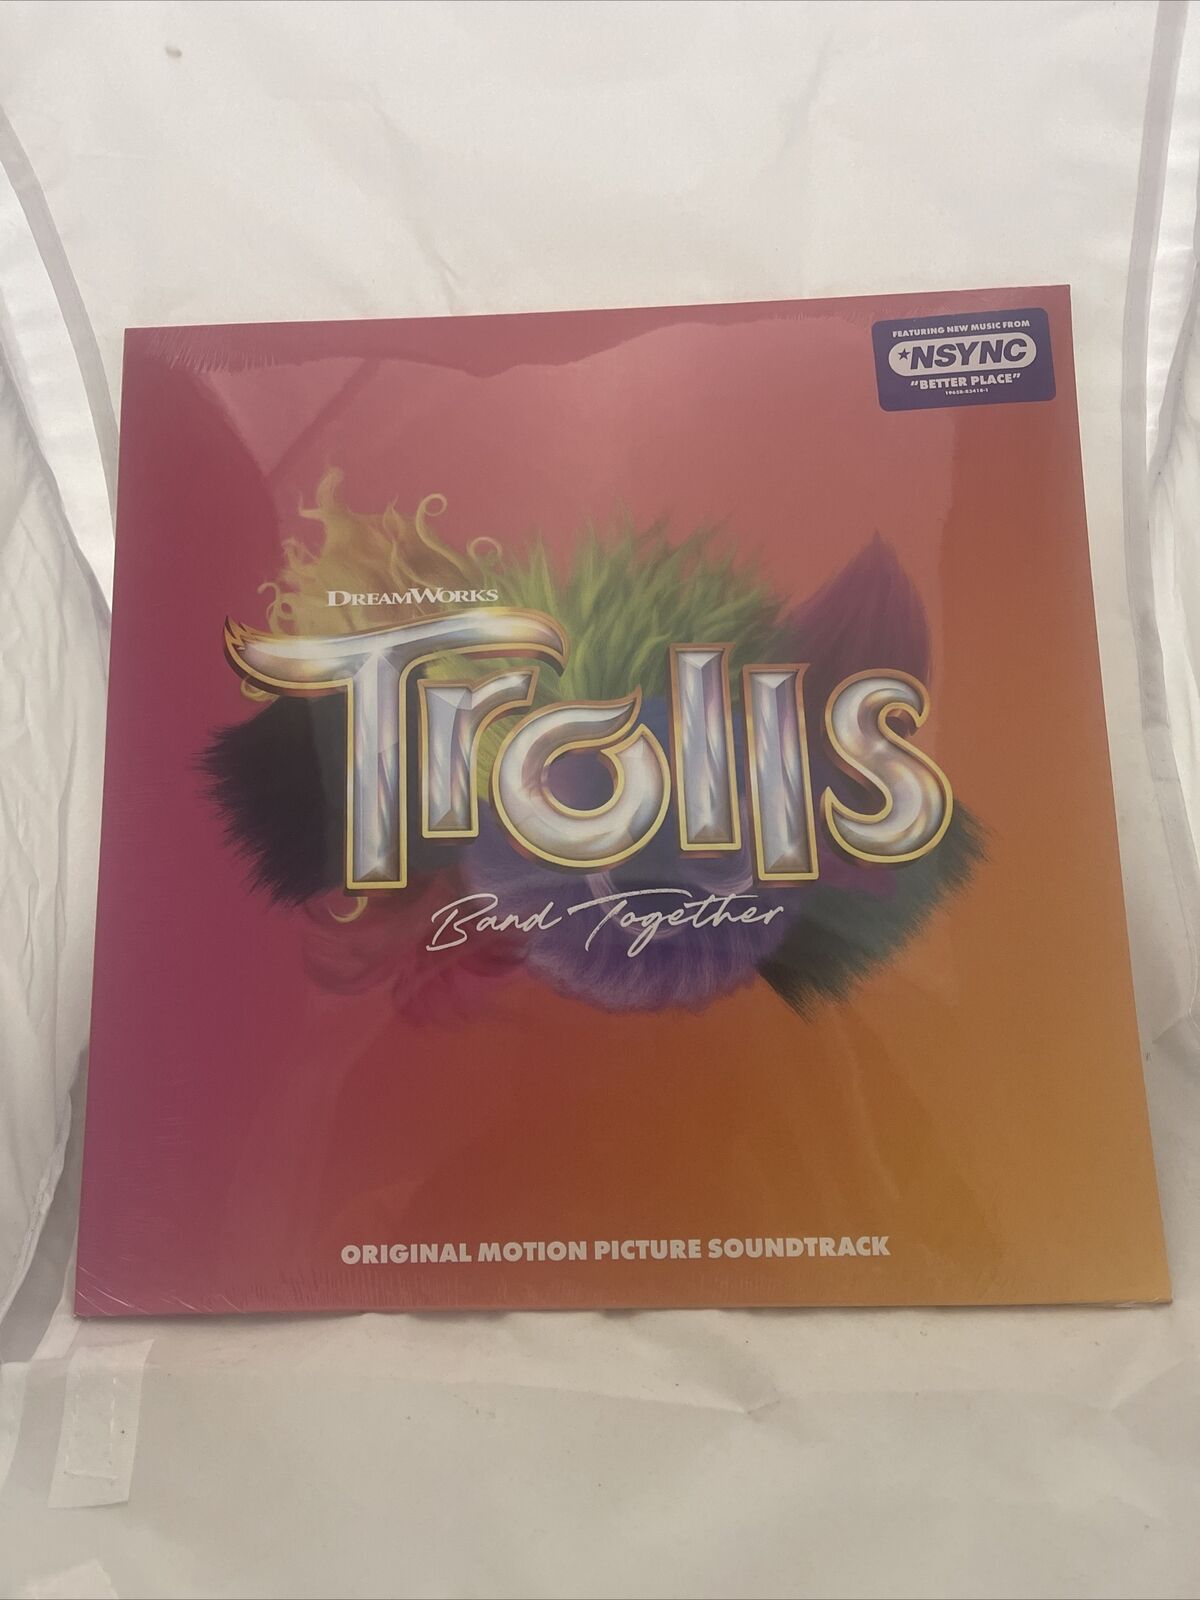 Trolls Band Together Original Soundtrack LP (2023) NEW NSNYC